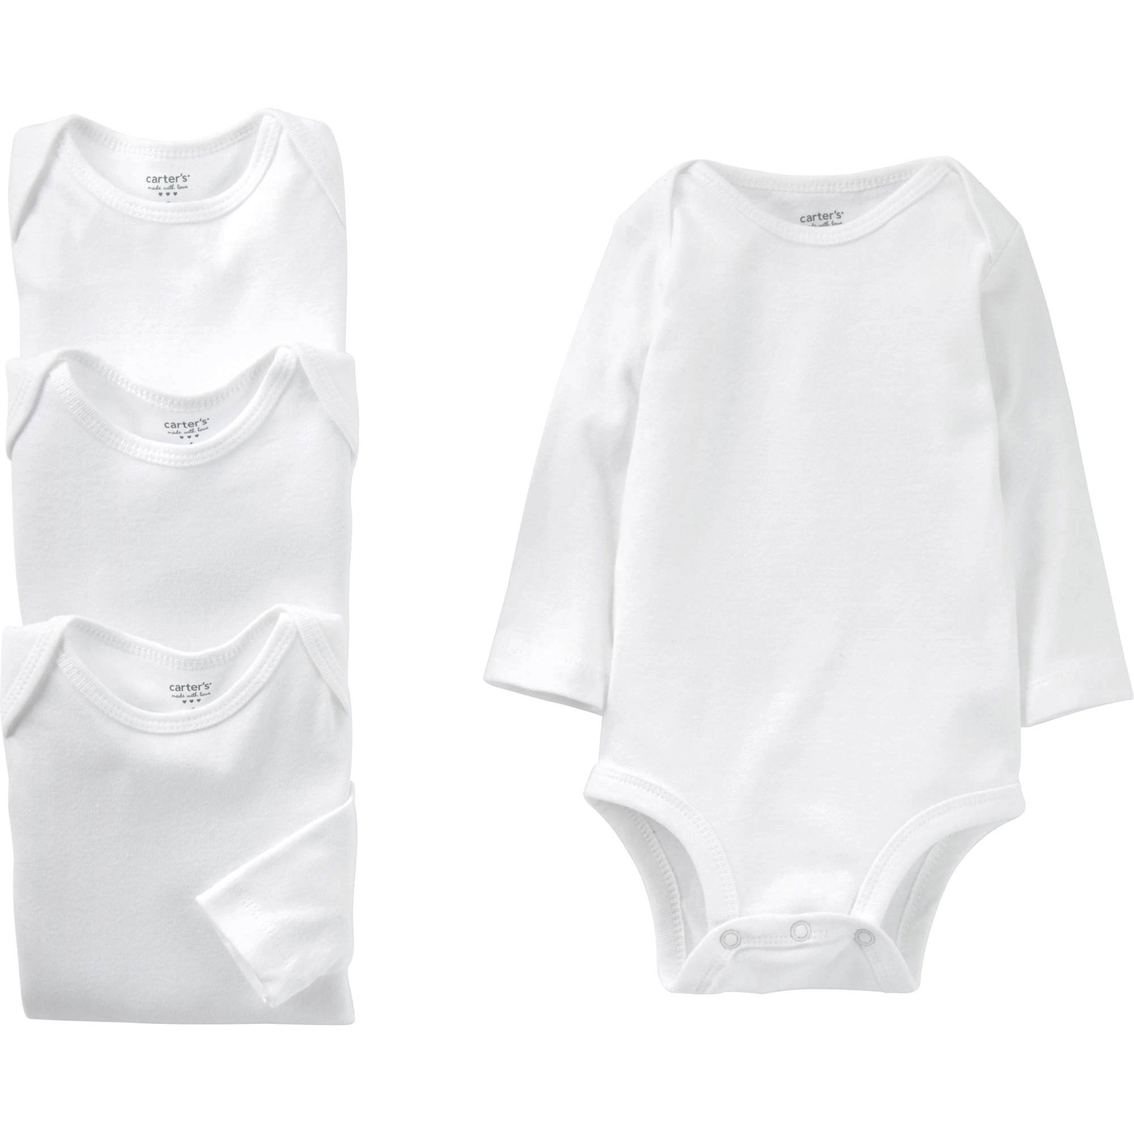 Carter's Infants Bodysuit 4 Pk. | Baby Girl 0-24 Months | Clothing ...